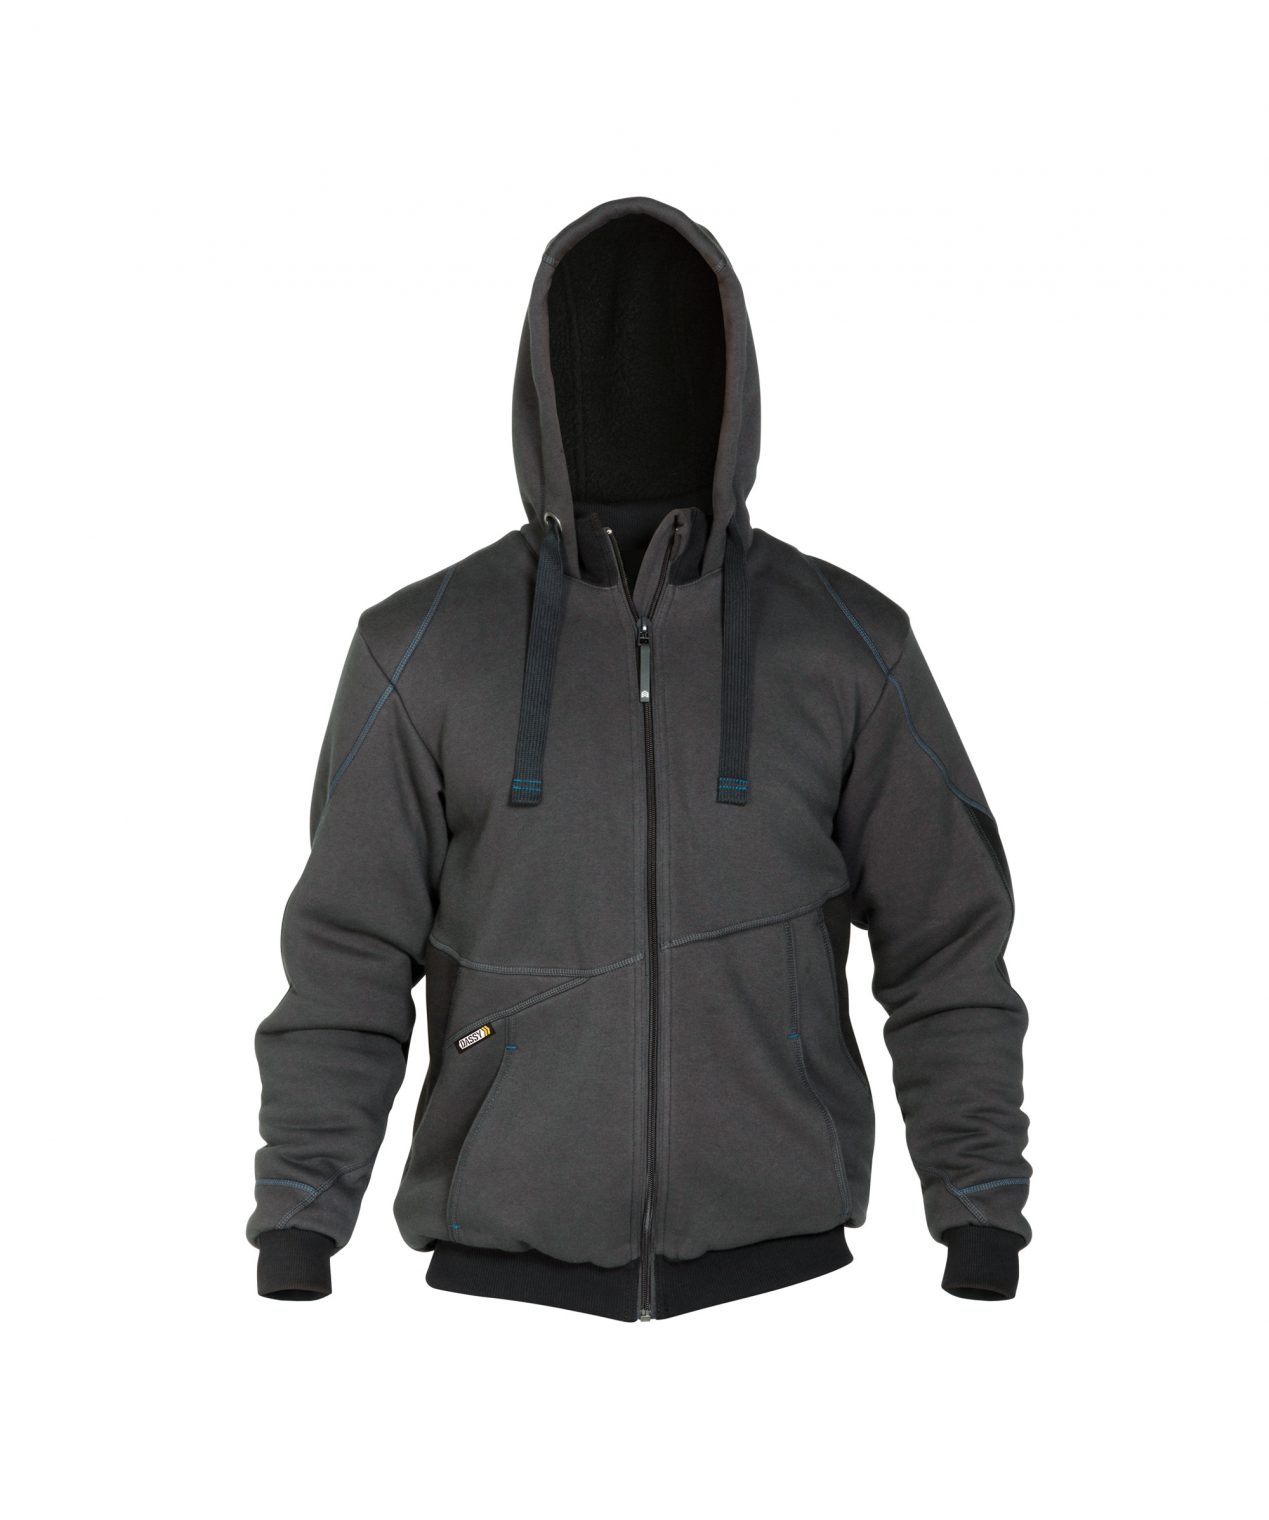 pulse sweatshirt jacket anthracite grey black detail 3